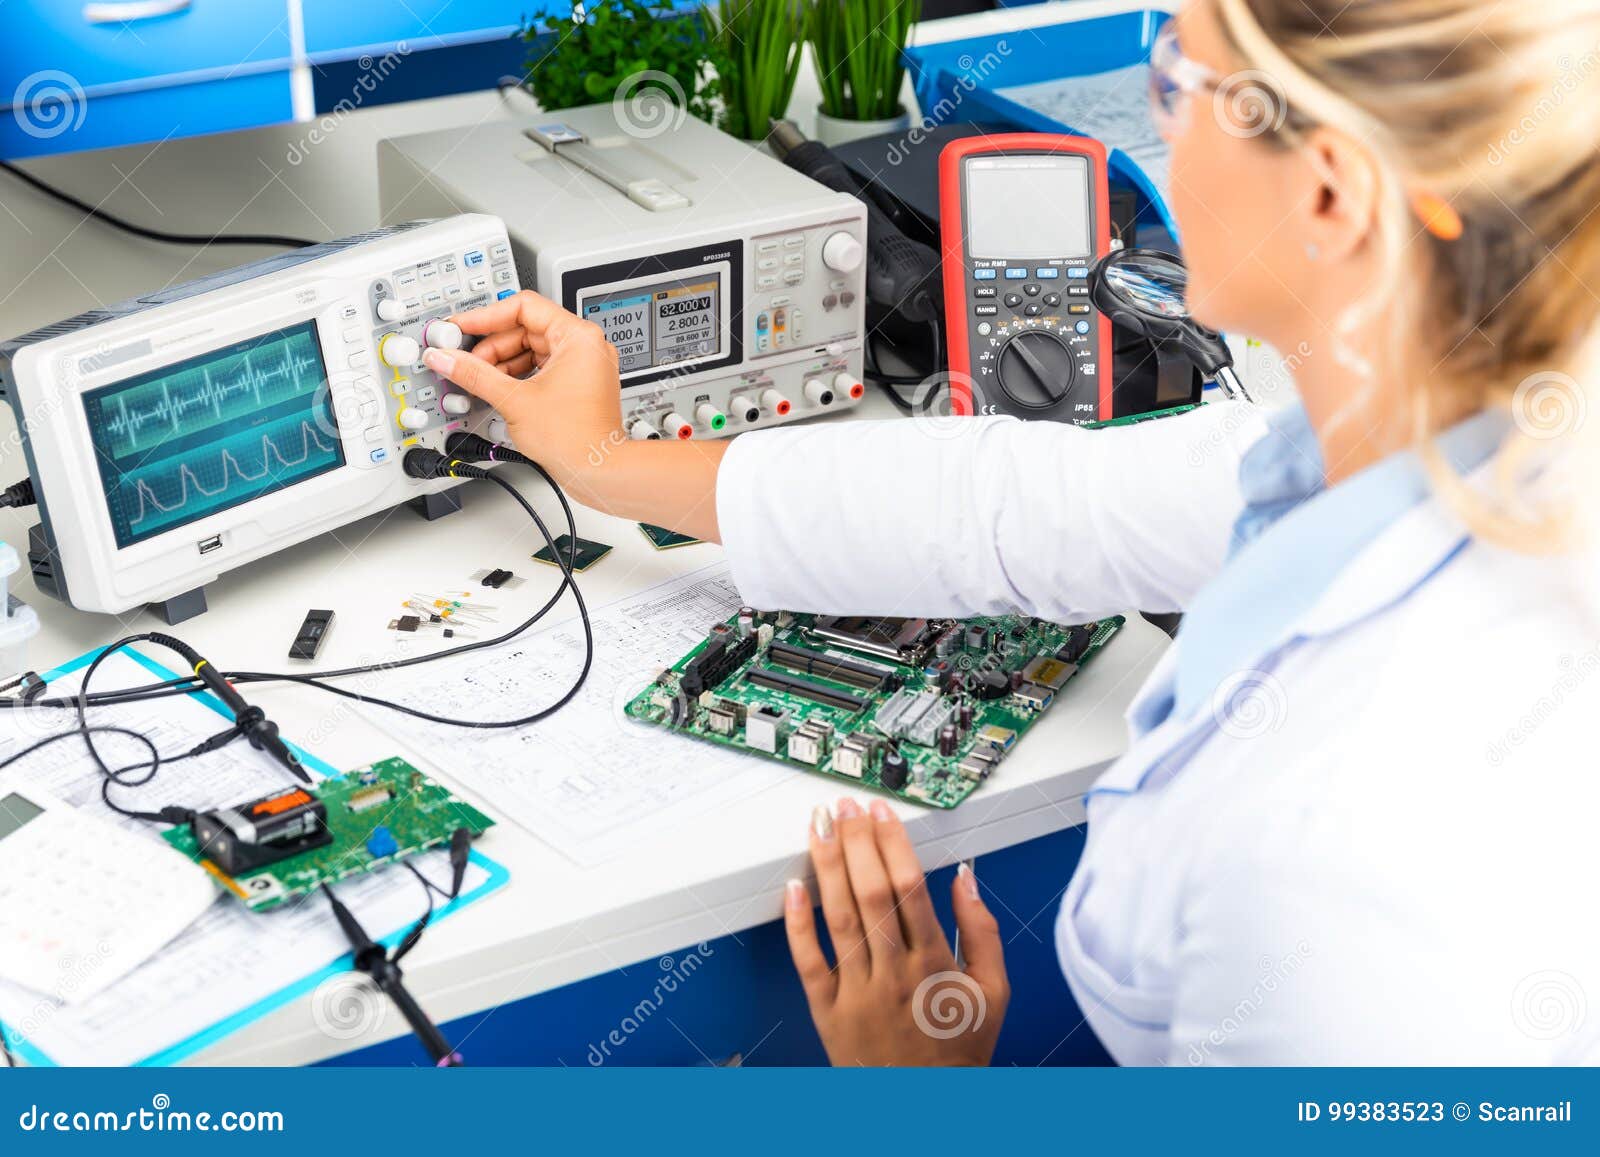 female electronic engineer using oscilloscope in laboratory